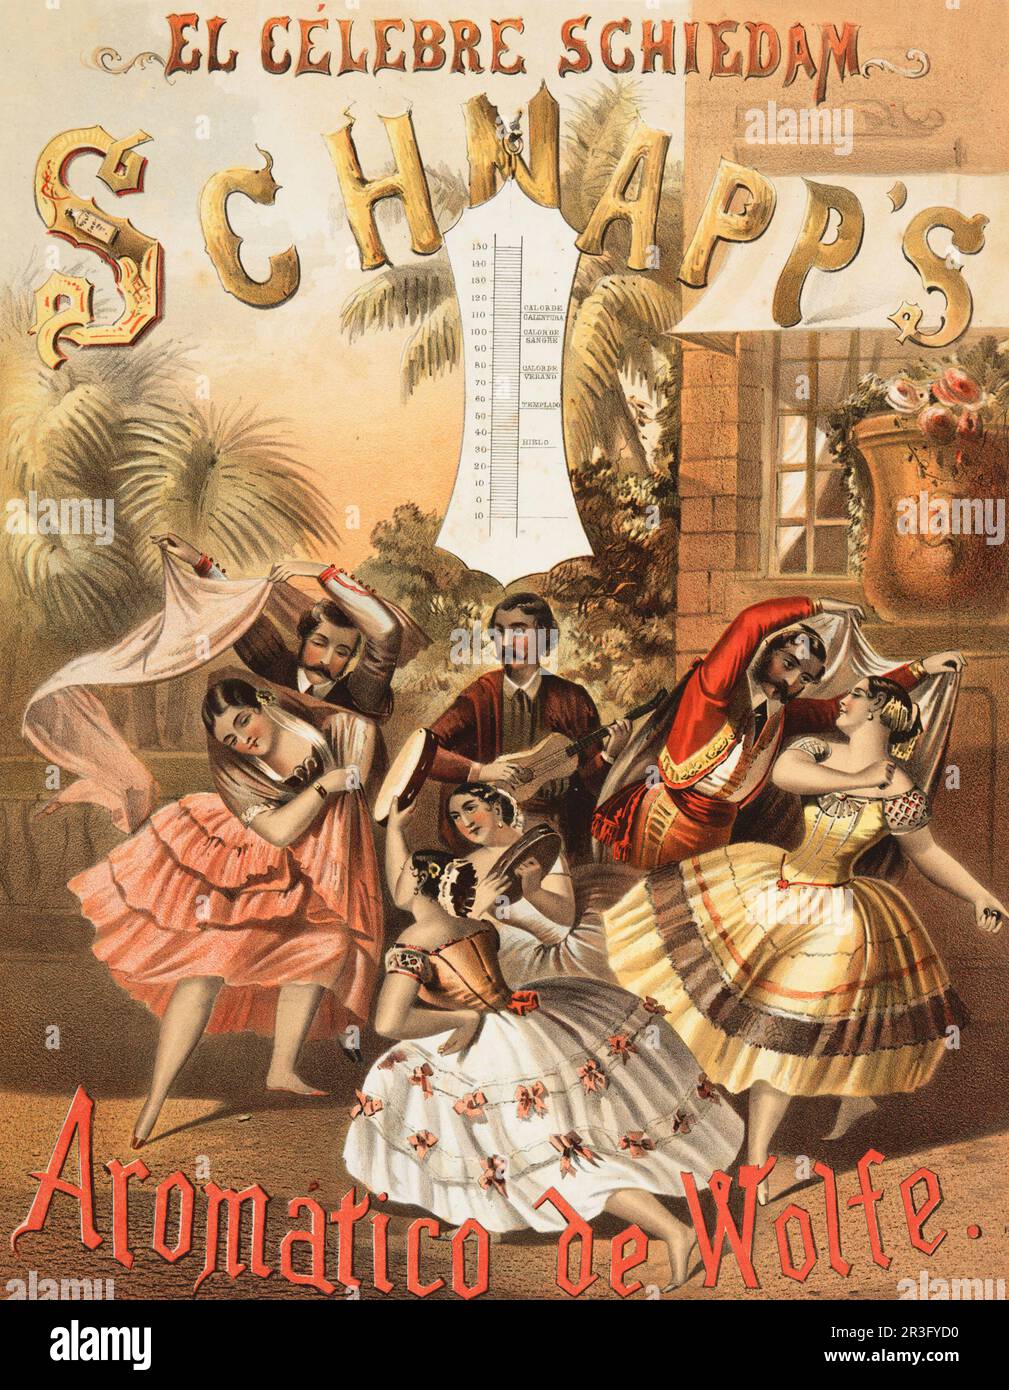 Vintage print advertising Udolpho Wolfe's Aromatic Schiedam Schnapps liquor. Stock Photo